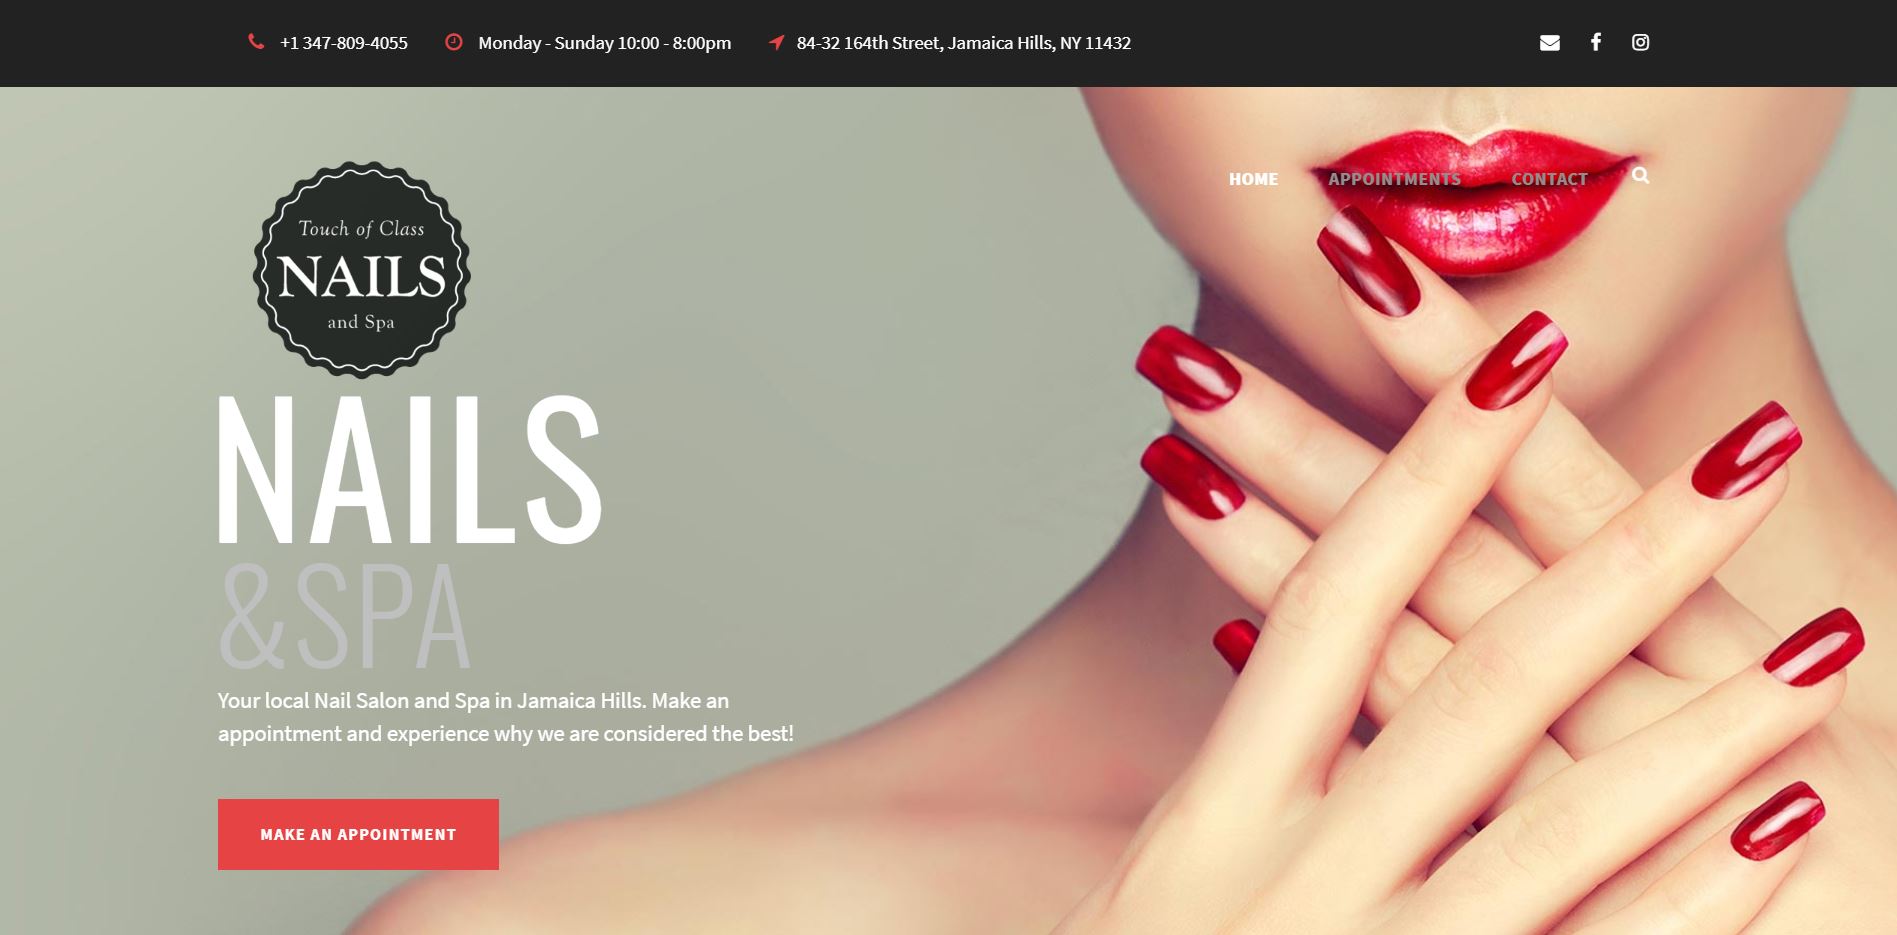 Touch of Class Nail Salon Website